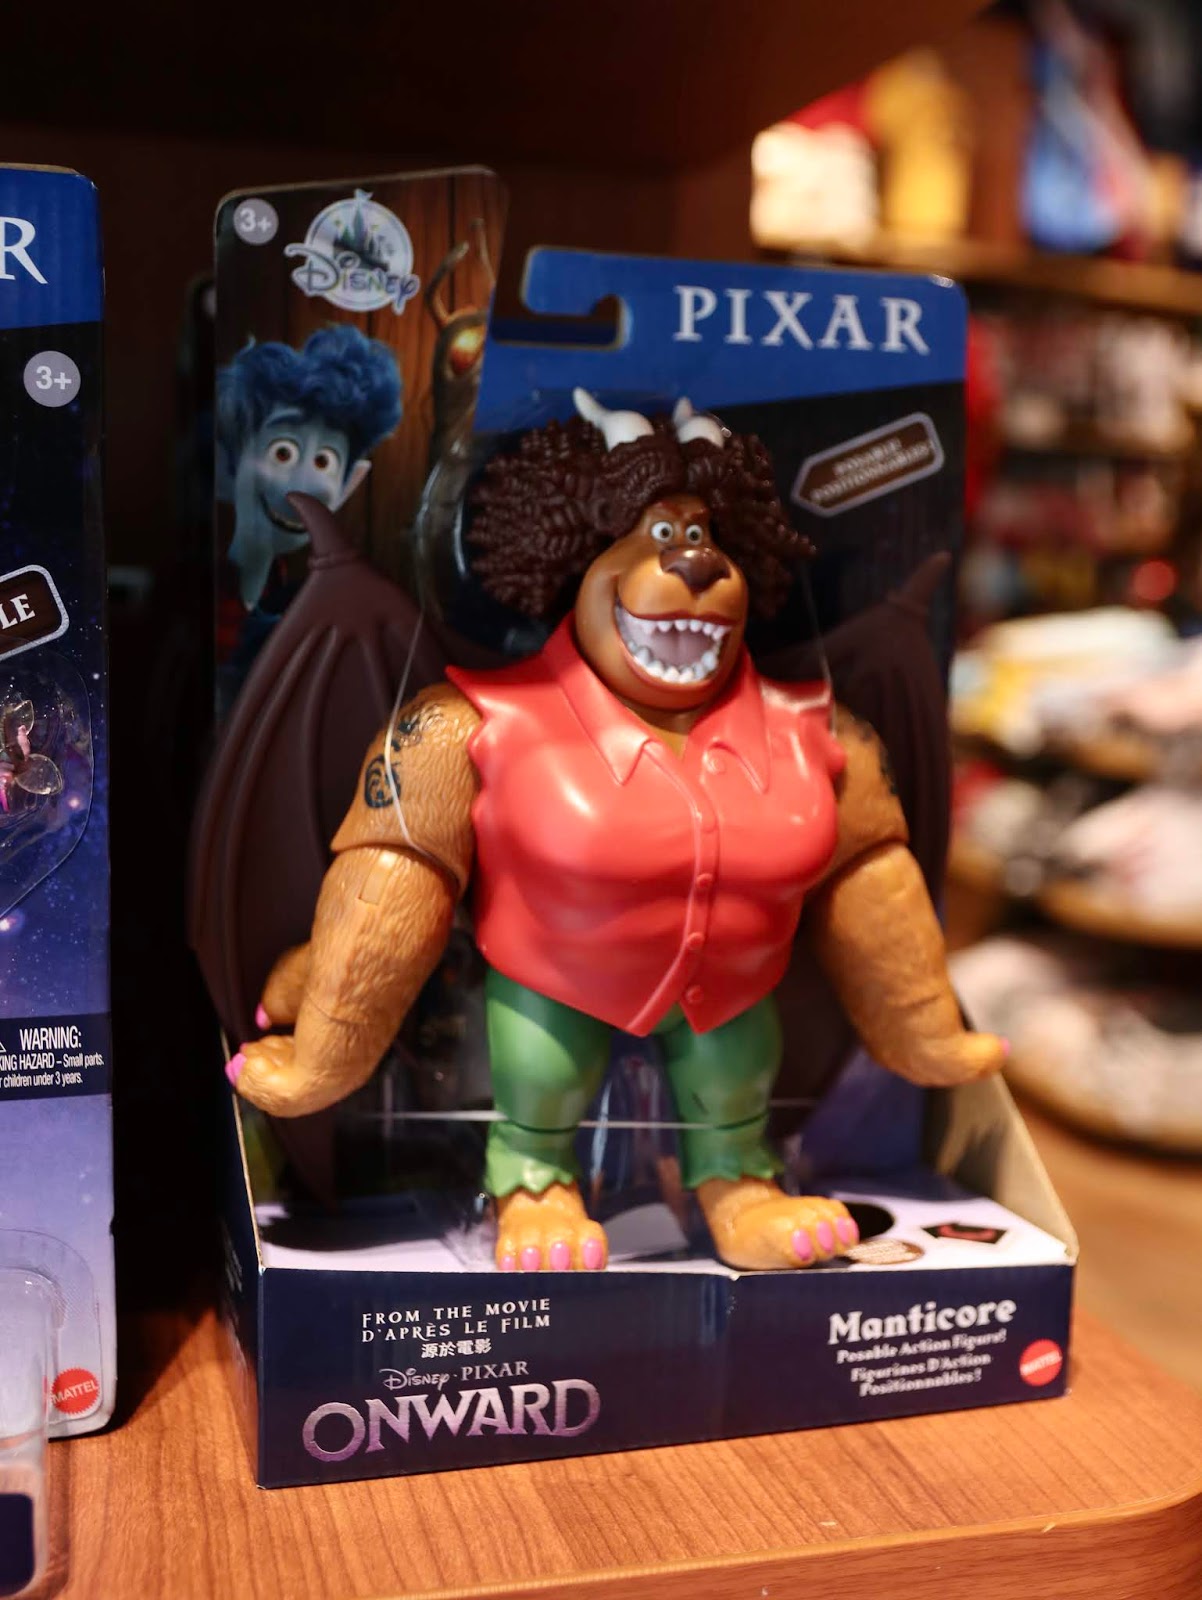 pixar onward the disney store merchandise toys release 2020 